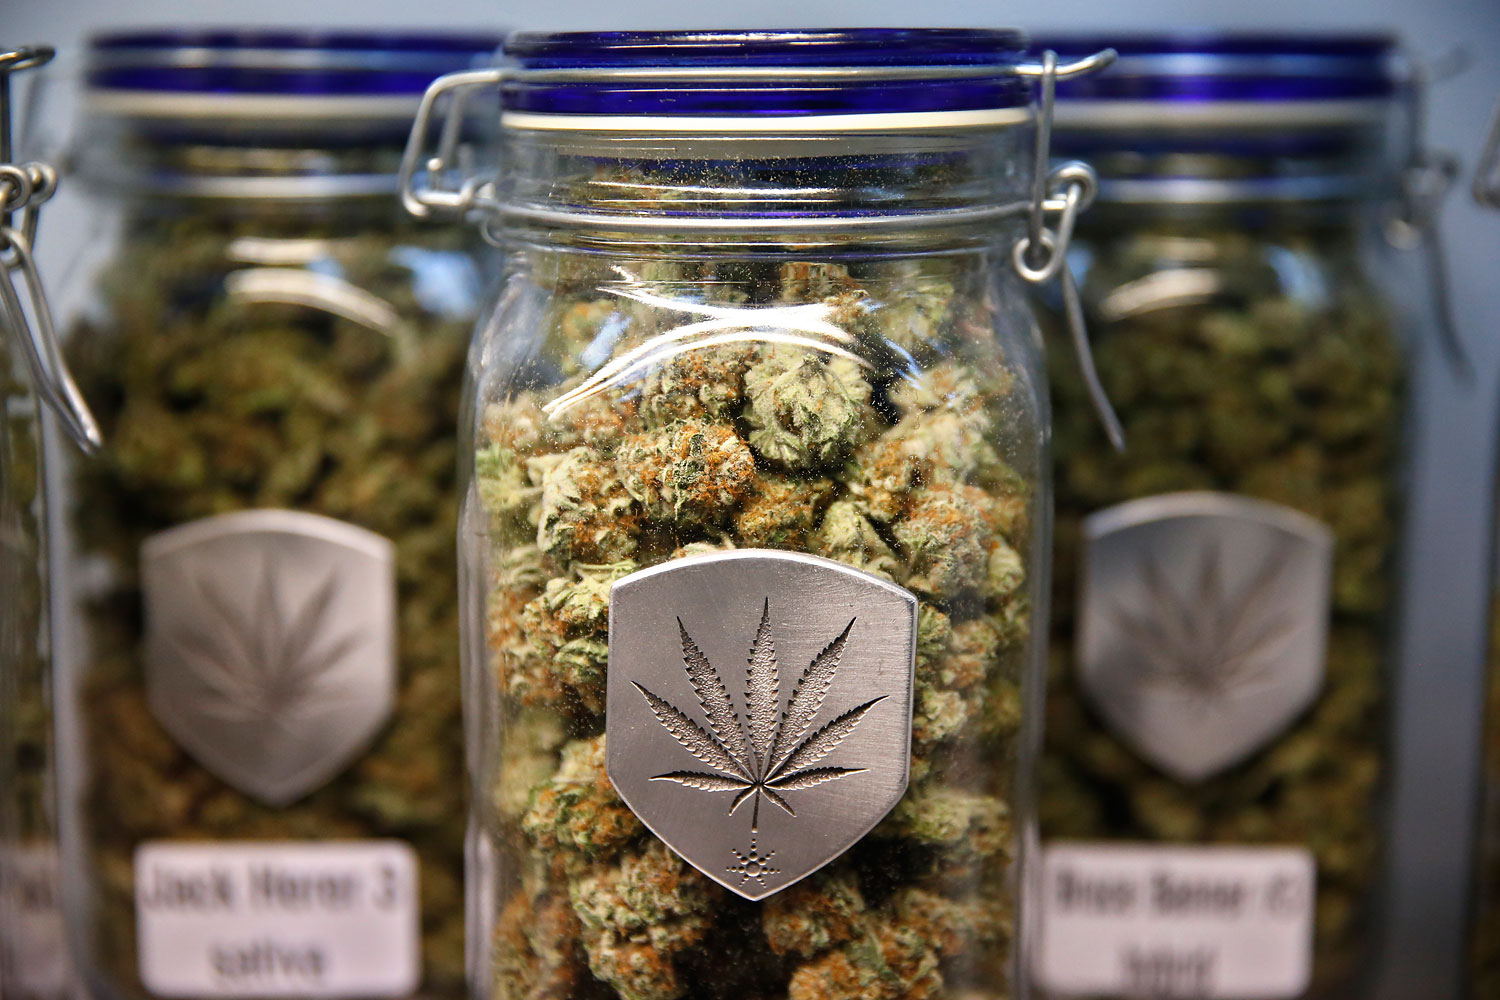 Different strains of pot are displayed for sale at Medicine Man marijuana dispensary in Denver on Dec. 27, 2013. (Brennan Linsley—AP)